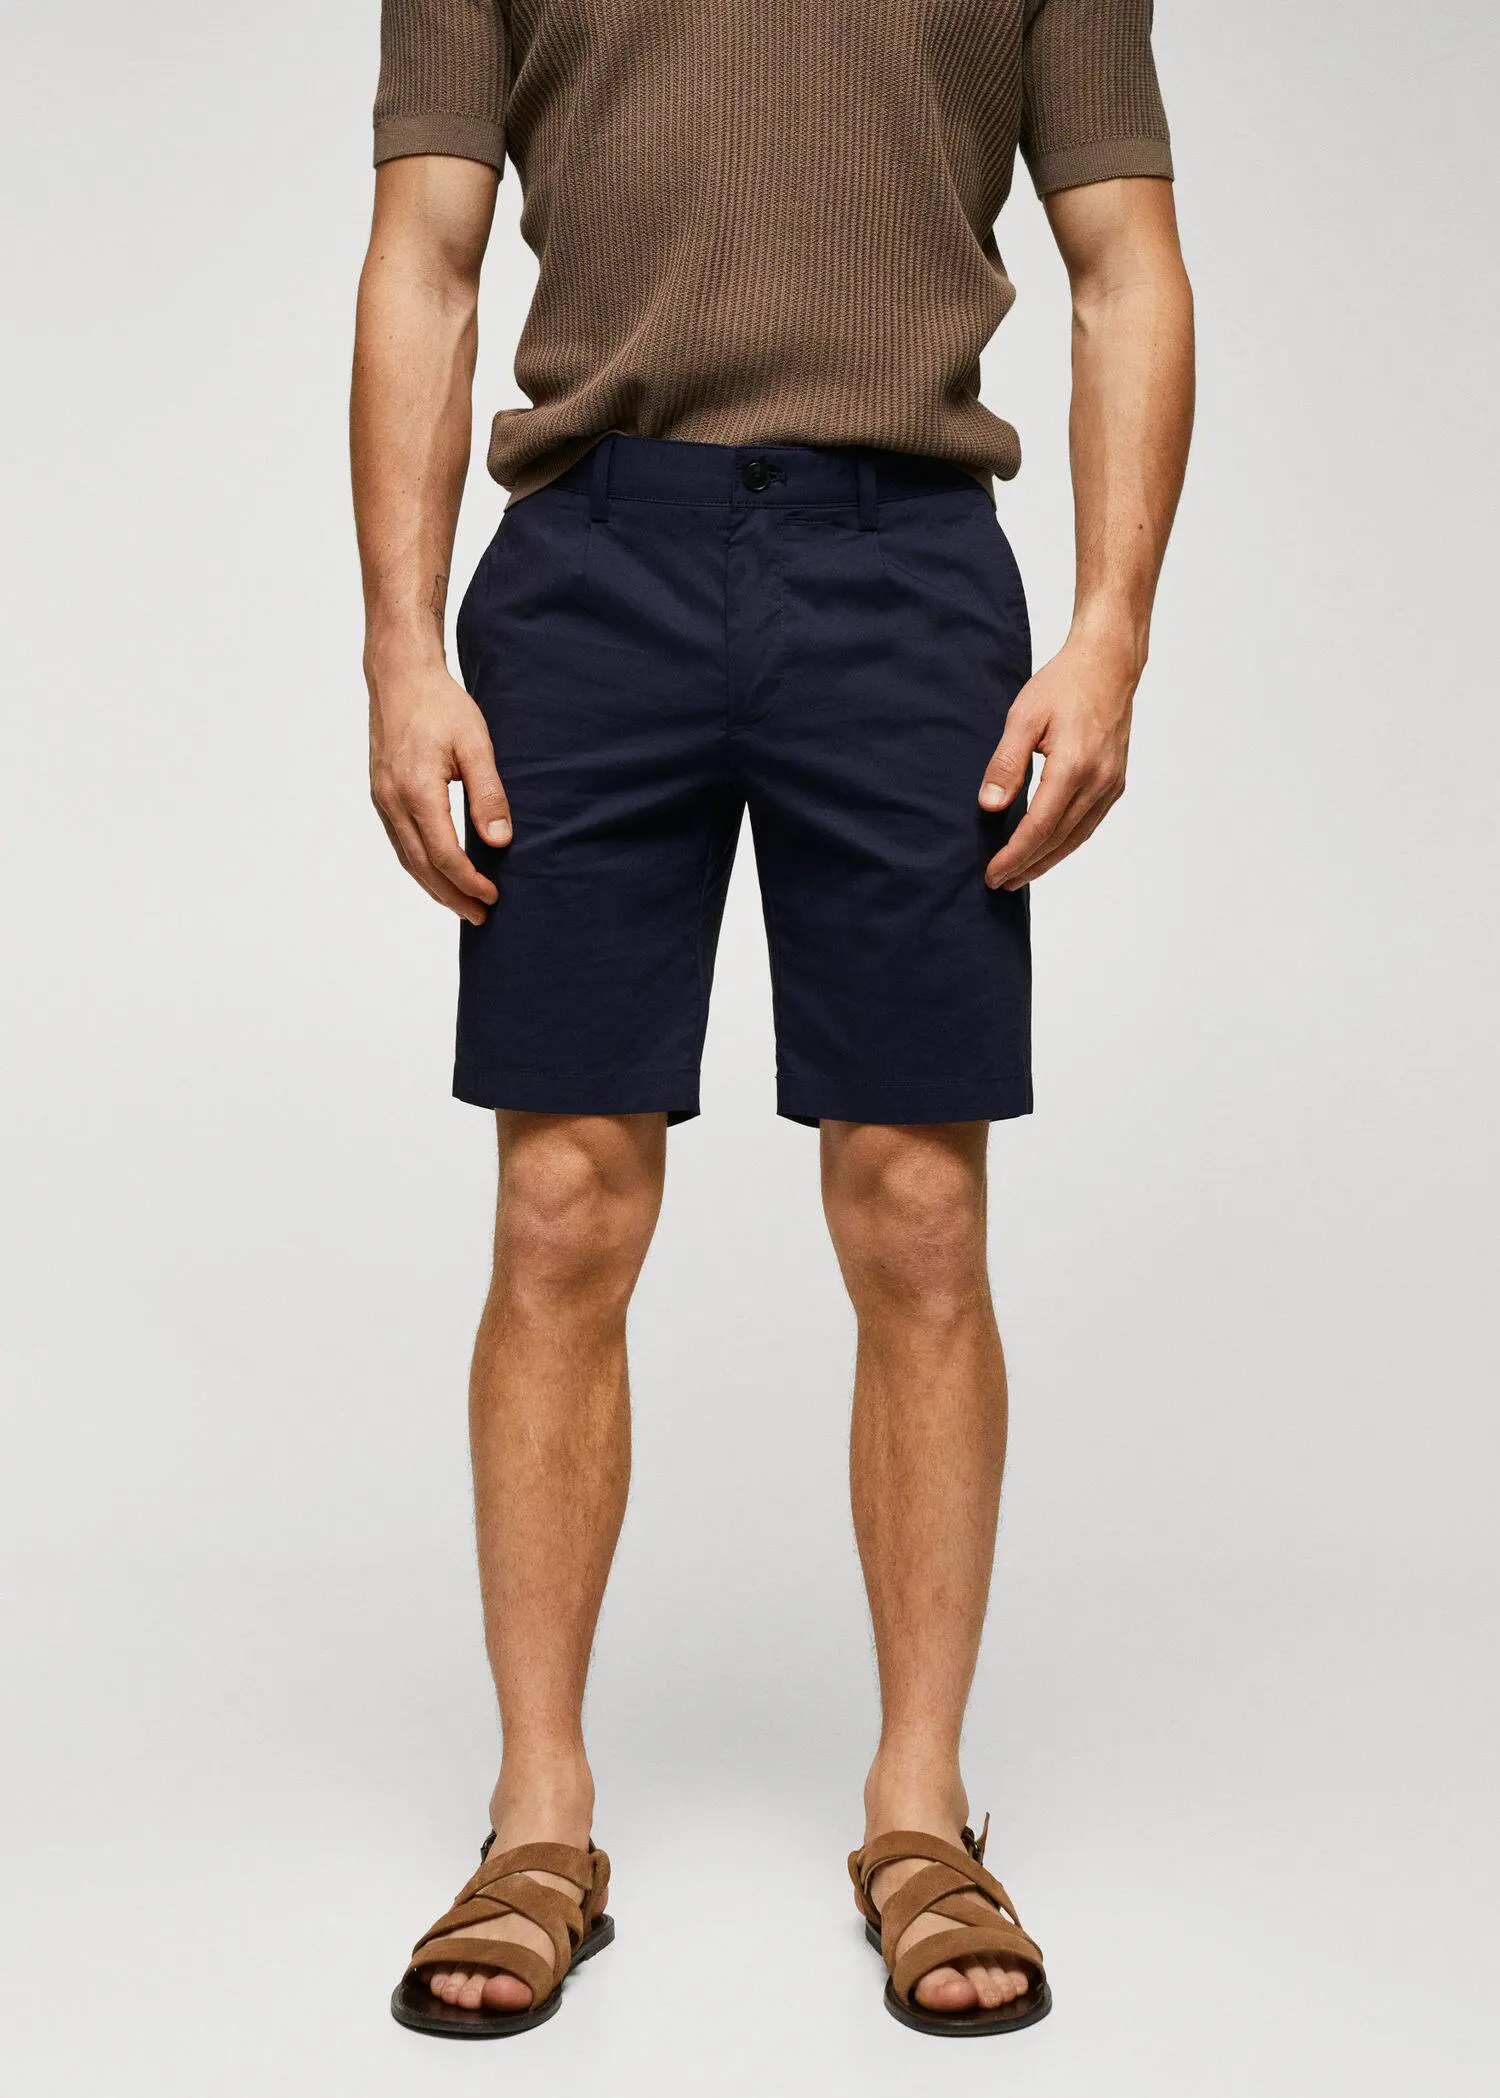 Light Blue Shirt with Brown Bermuda Shorts